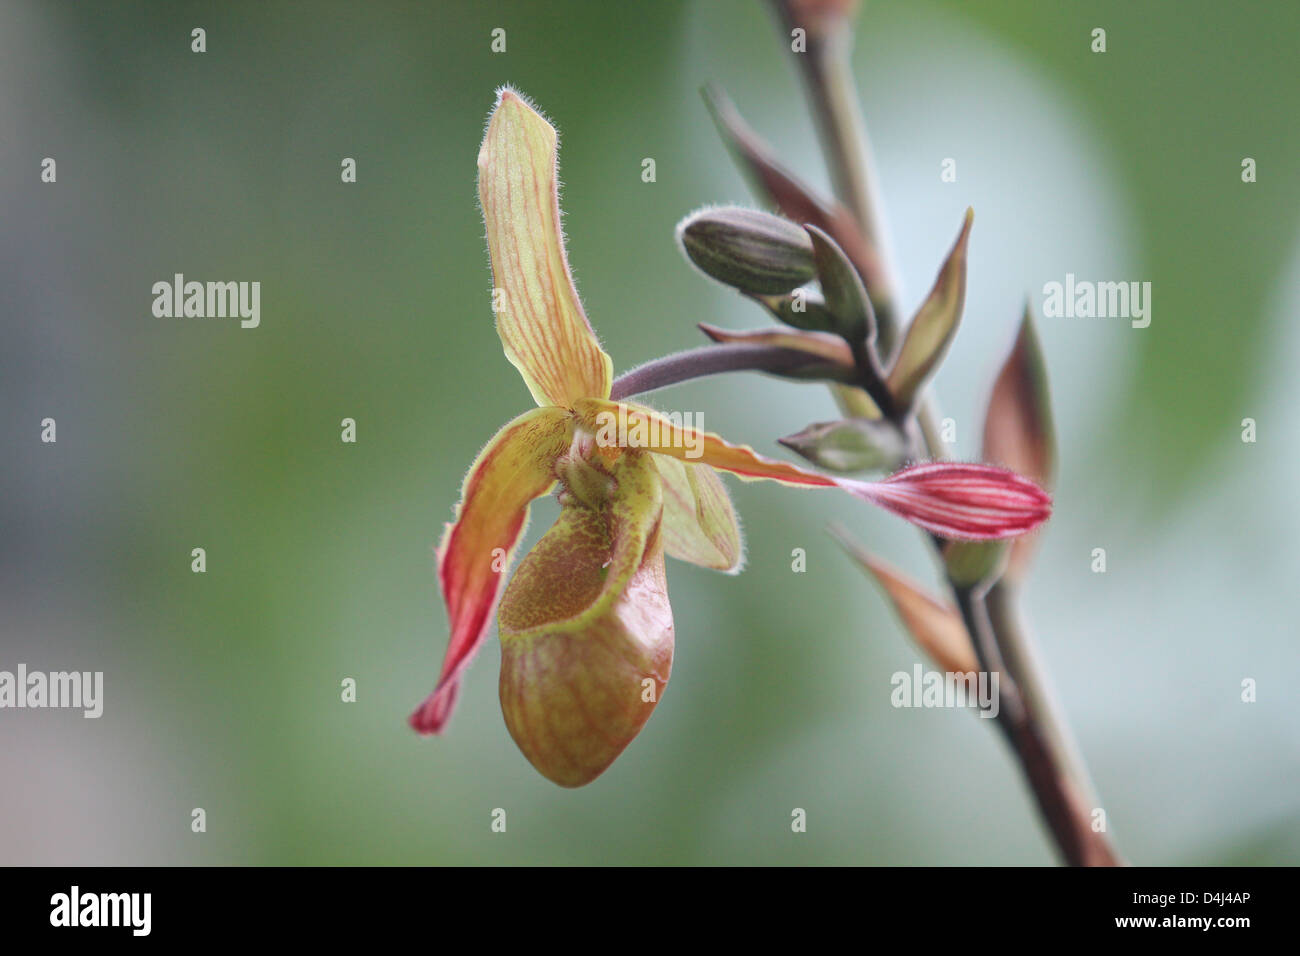 Phragmepedium Orchid blurred background Stock Photo